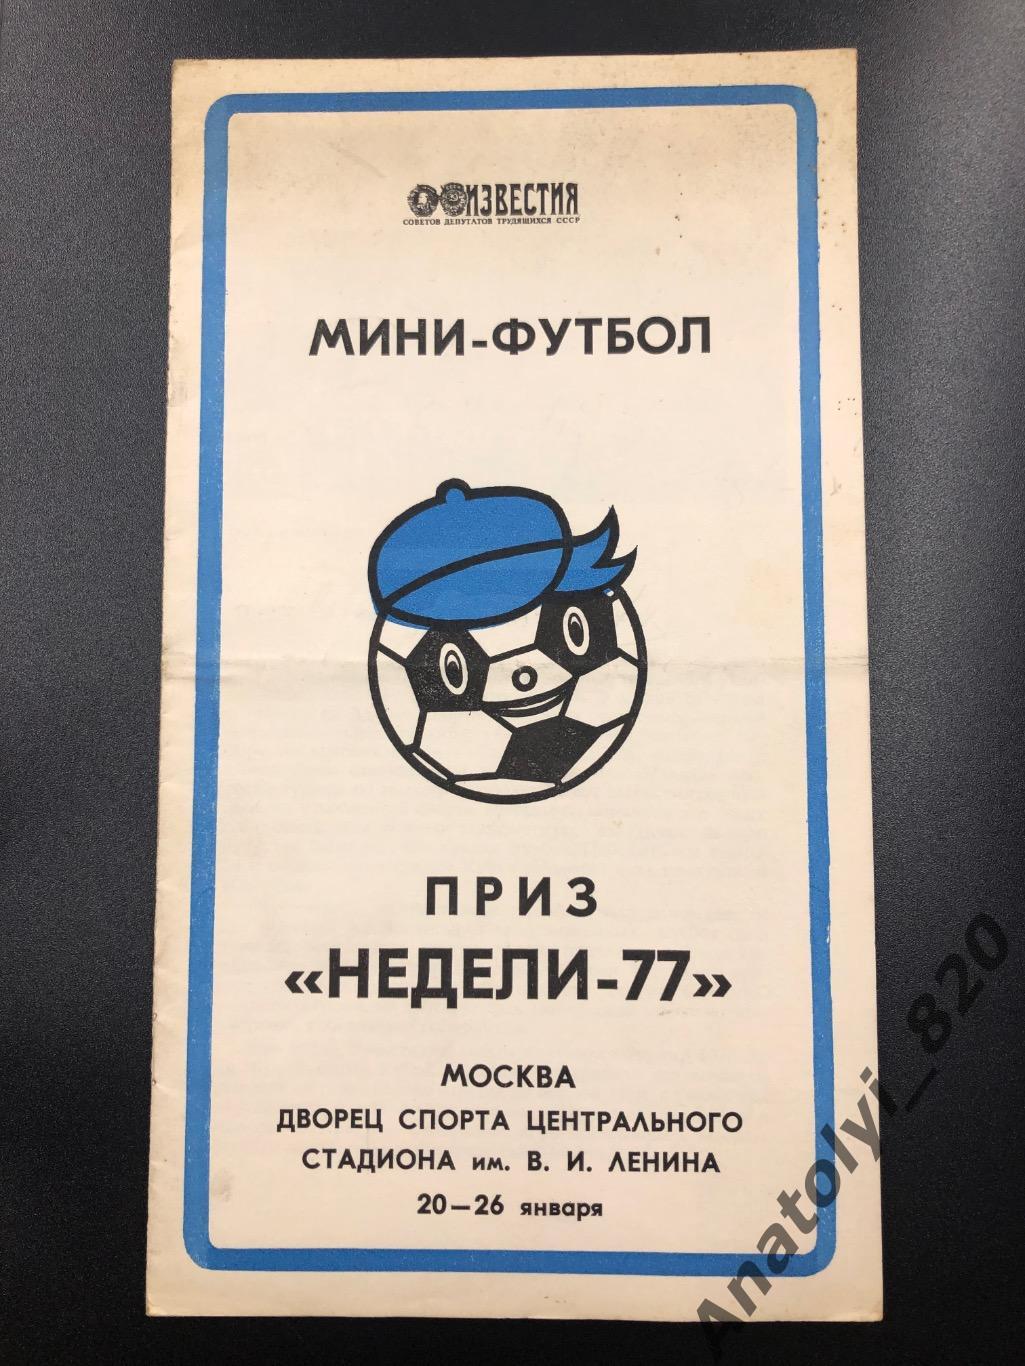 Мини футбол, Москва приз «Недели-77», 20-26 января 1977 года